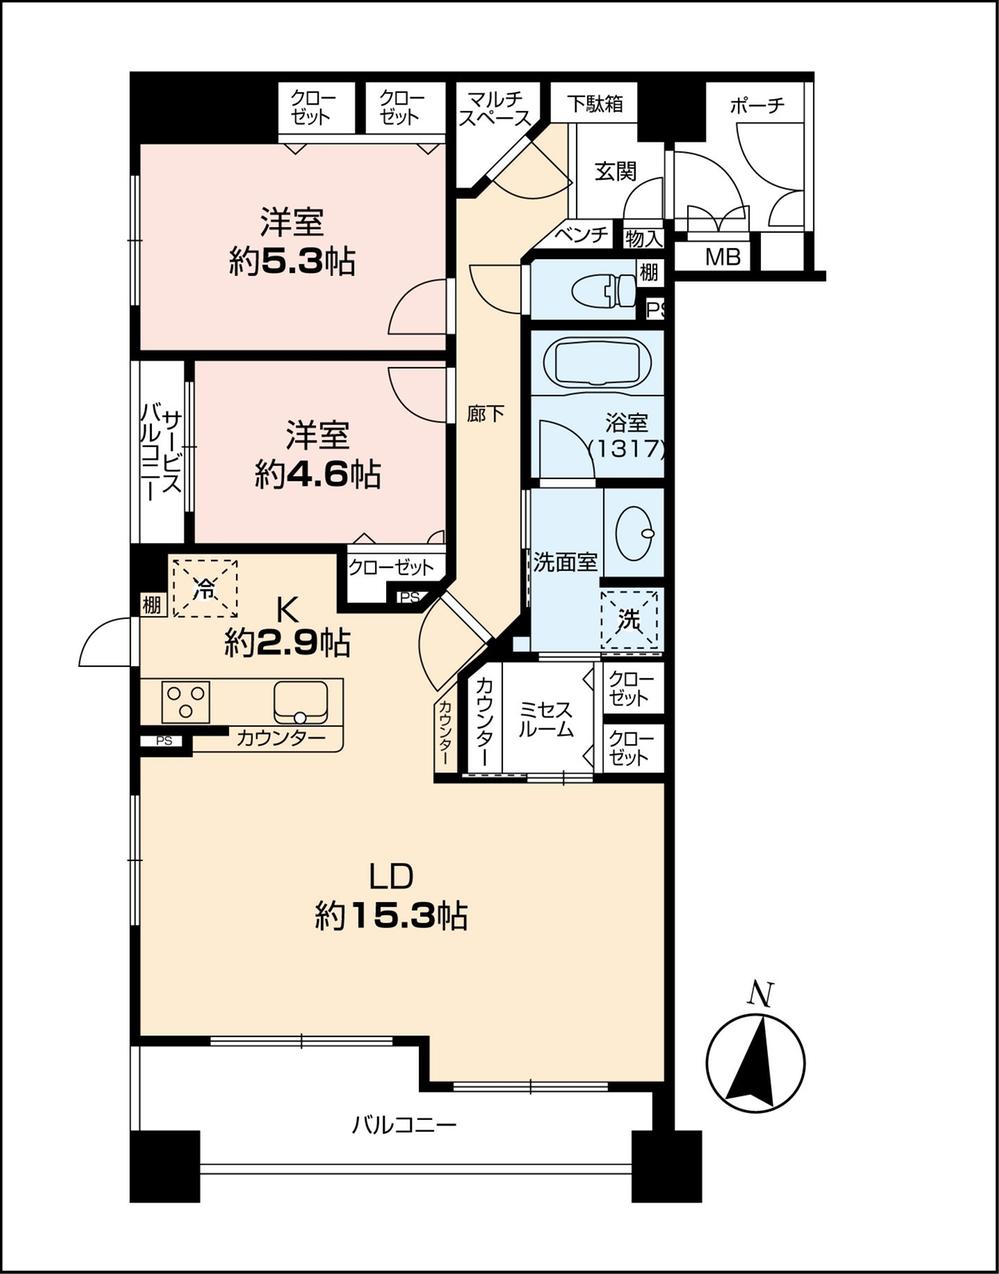 Floor plan. 2LDK, Price 20.8 million yen, Occupied area 71.01 sq m , Balcony area 7.9 sq m